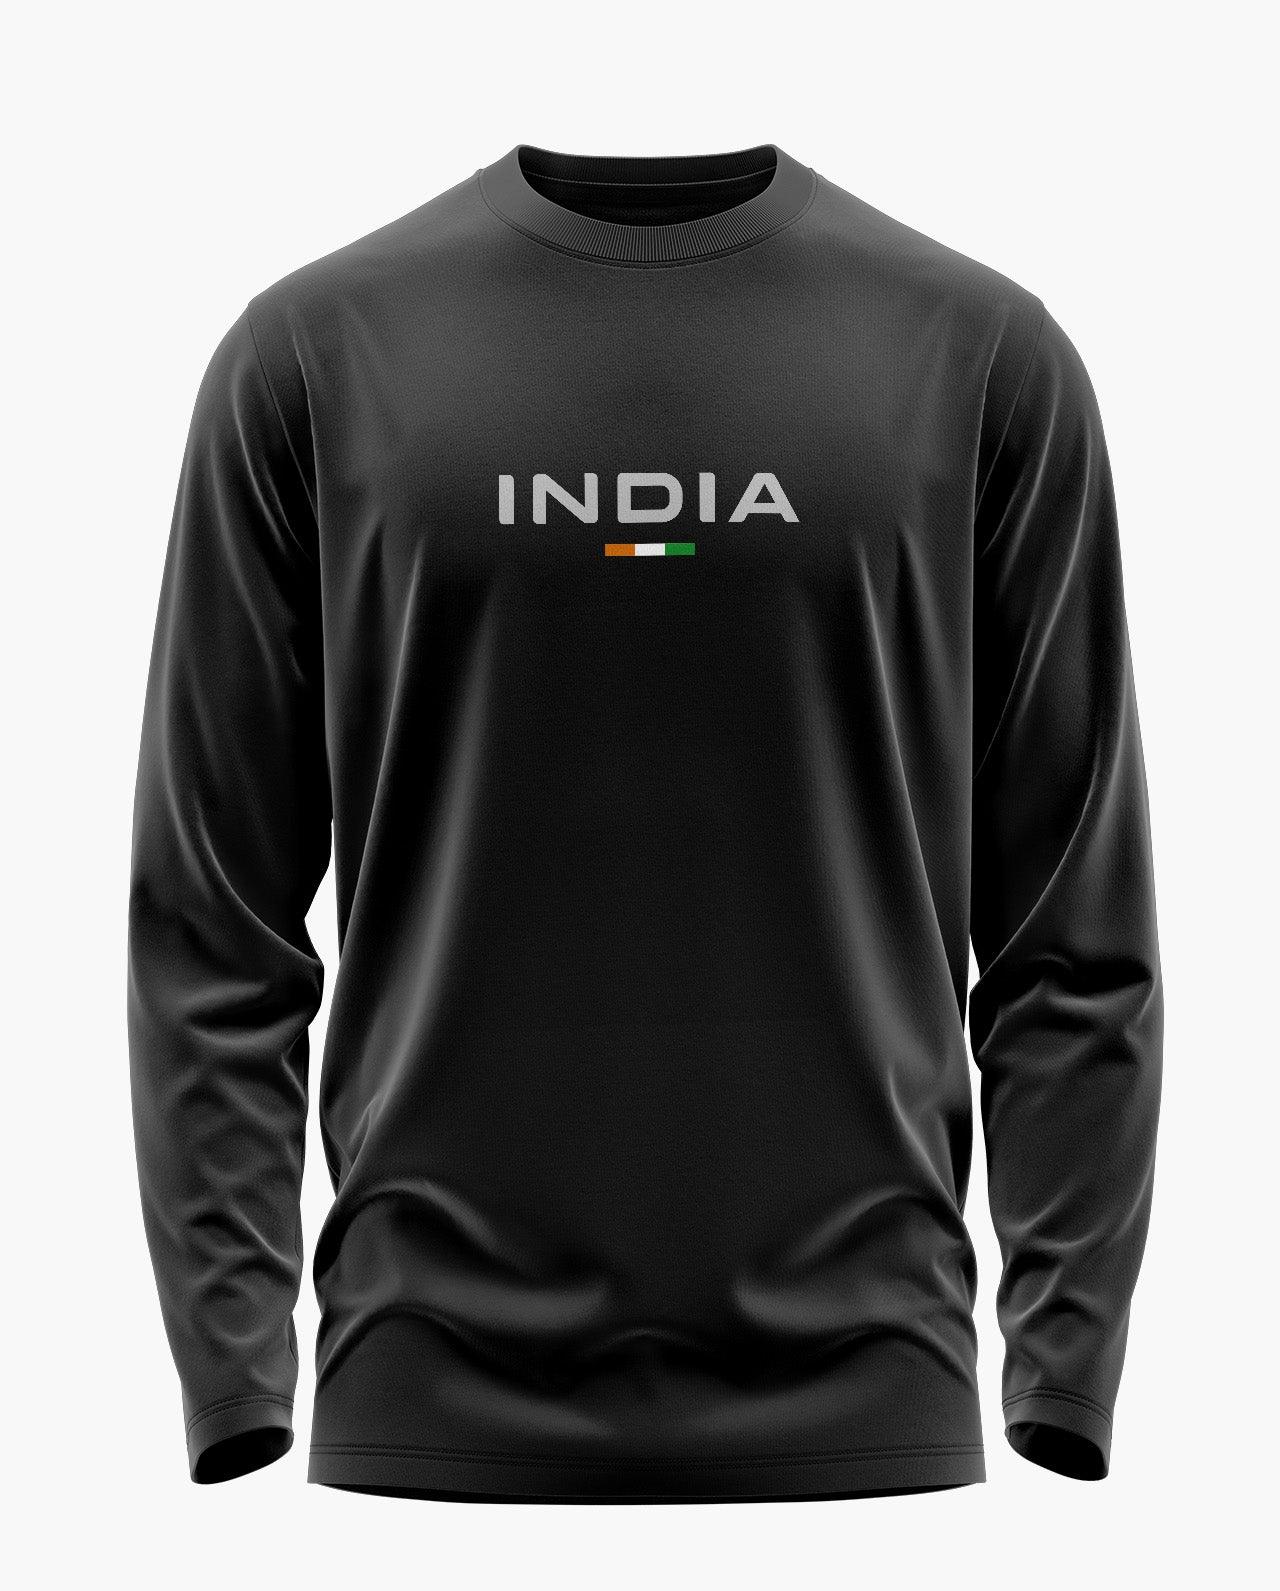 Buy NDA Crew Neck T-Shirt Online Indic Inspirations – indic inspirations